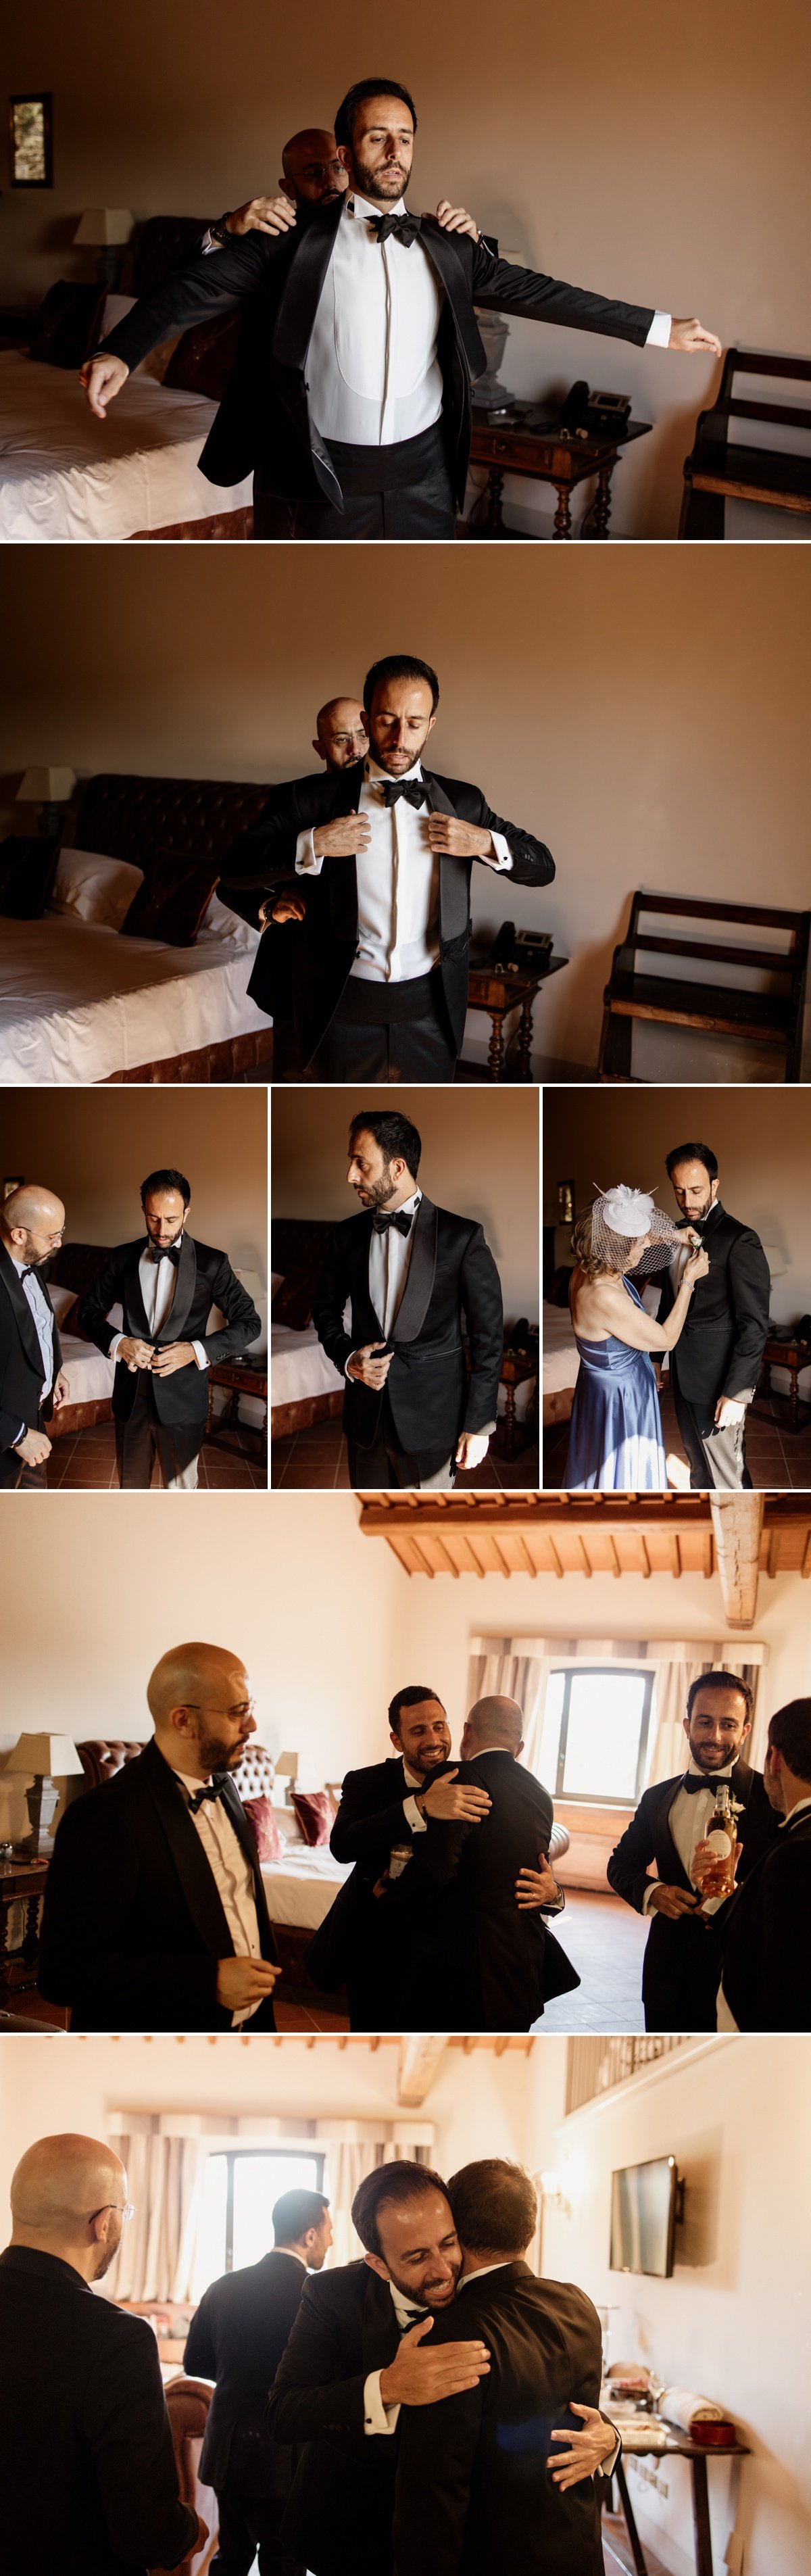 tuscany-wedding-dallk-04.jpg